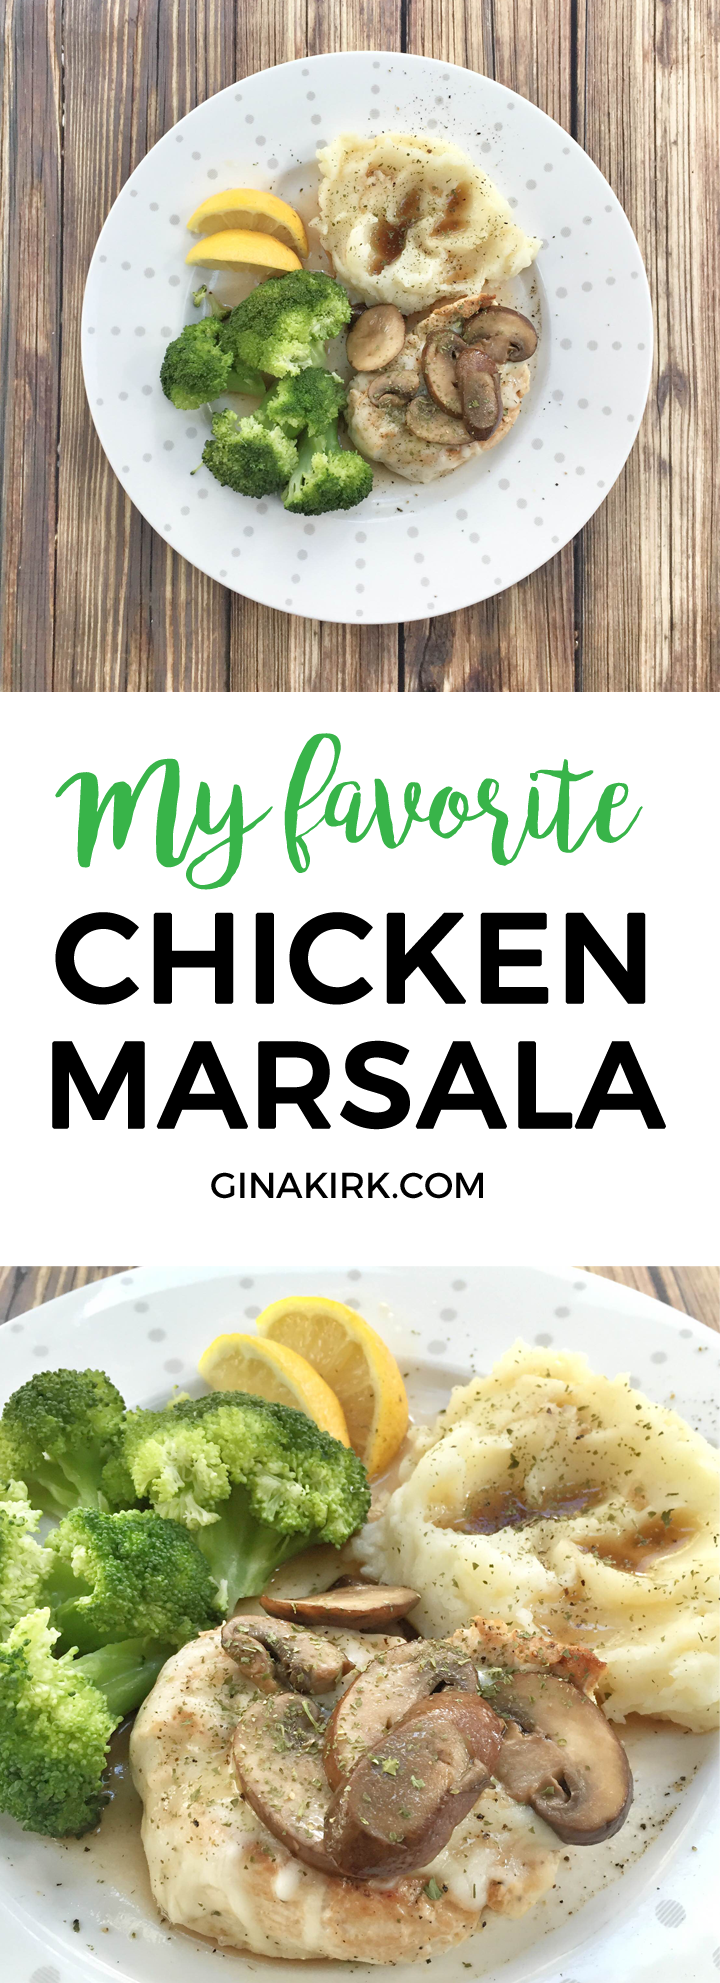 My favorite chicken marsala recipe | Easy weeknight chicken marsala dinner | Simple chicken dinner dish | GinaKirk.com @ginaekirk